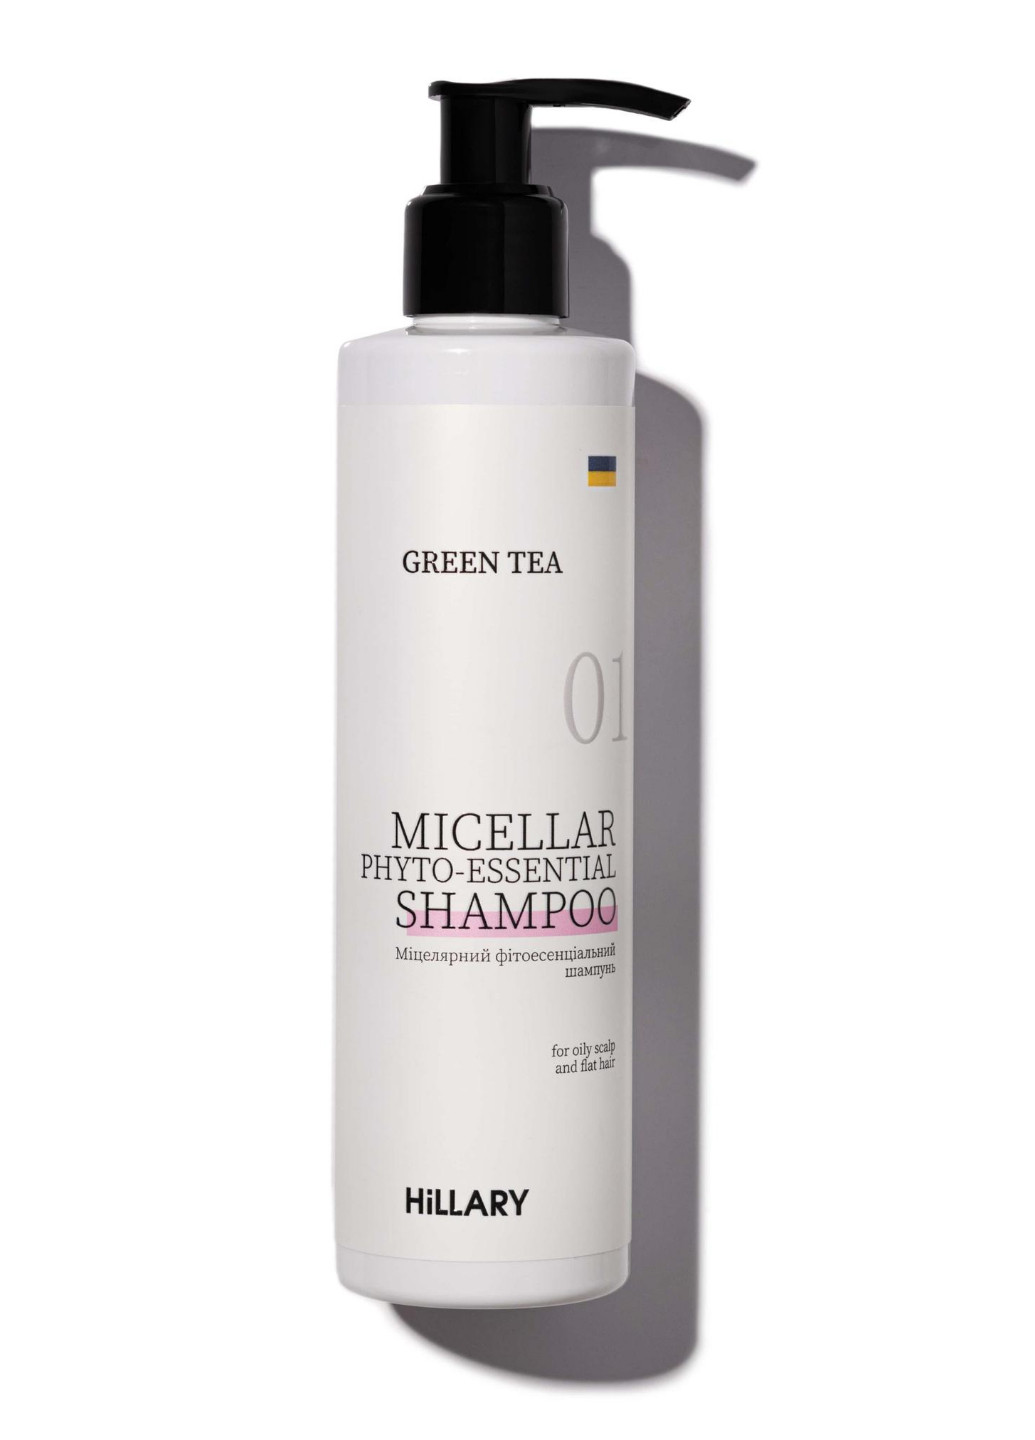 Міцелярний фітоесенціальний шампунь Green Tea Green Tea Micellar Phyto-essential Shampoo, 250 мл Hillary (254032633)